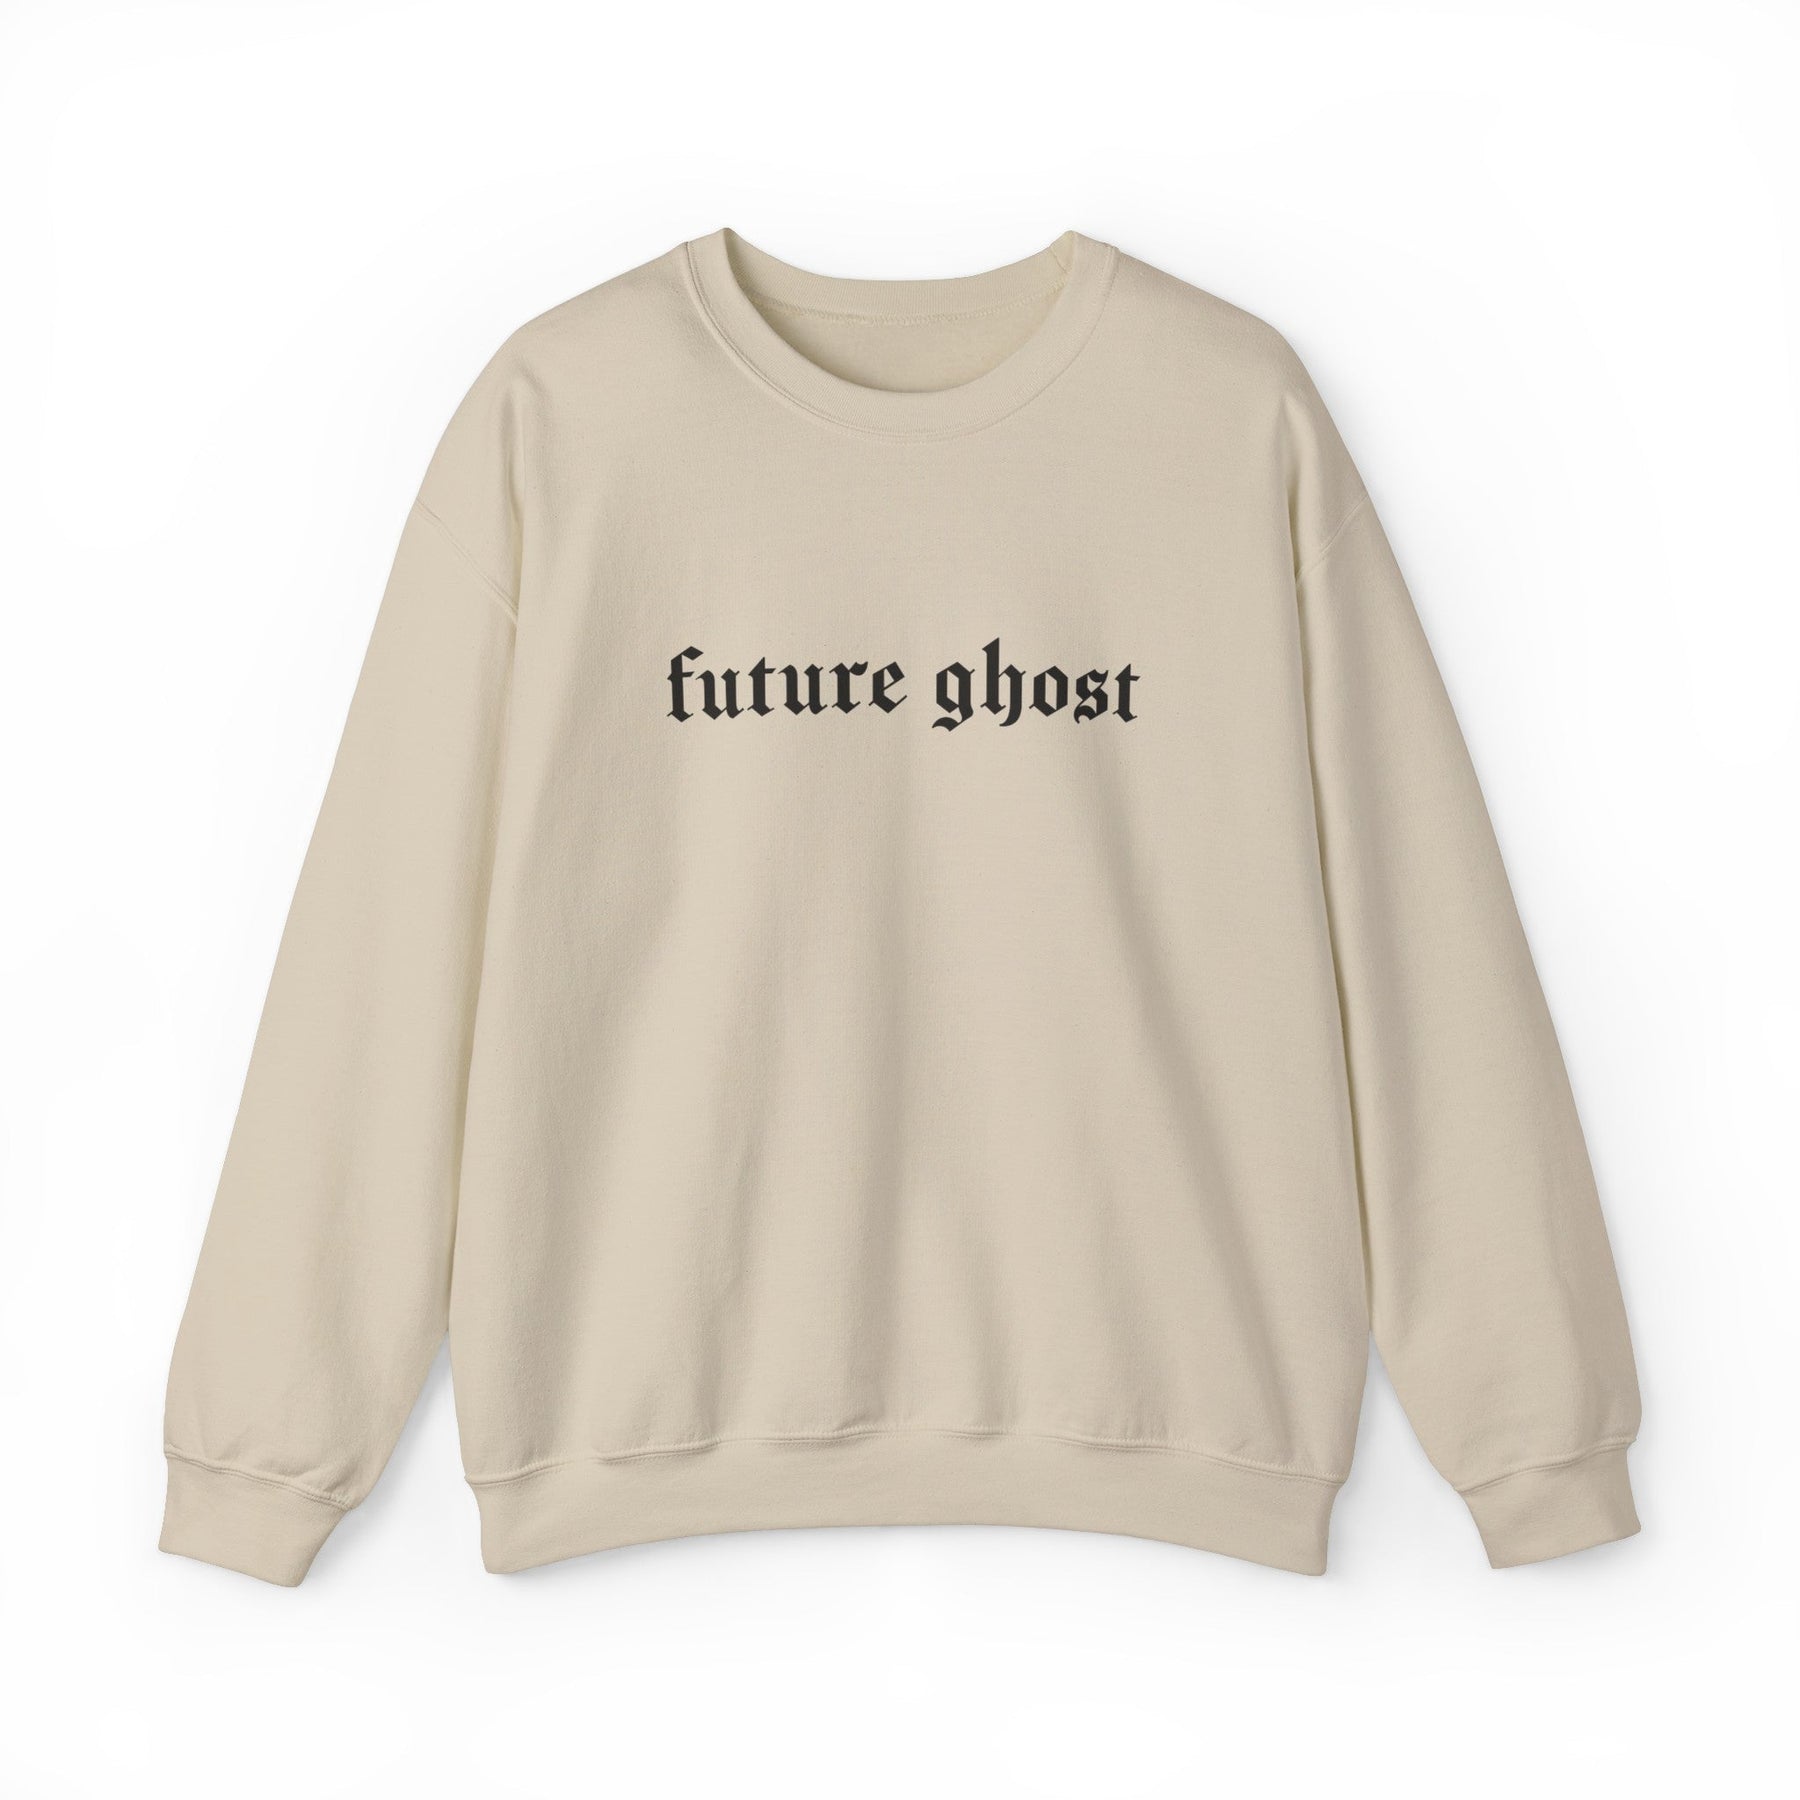 Future Ghost Long Sleeve Crew Neck Sweatshirt - Goth Cloth Co.Sweatshirt28792322593379131867